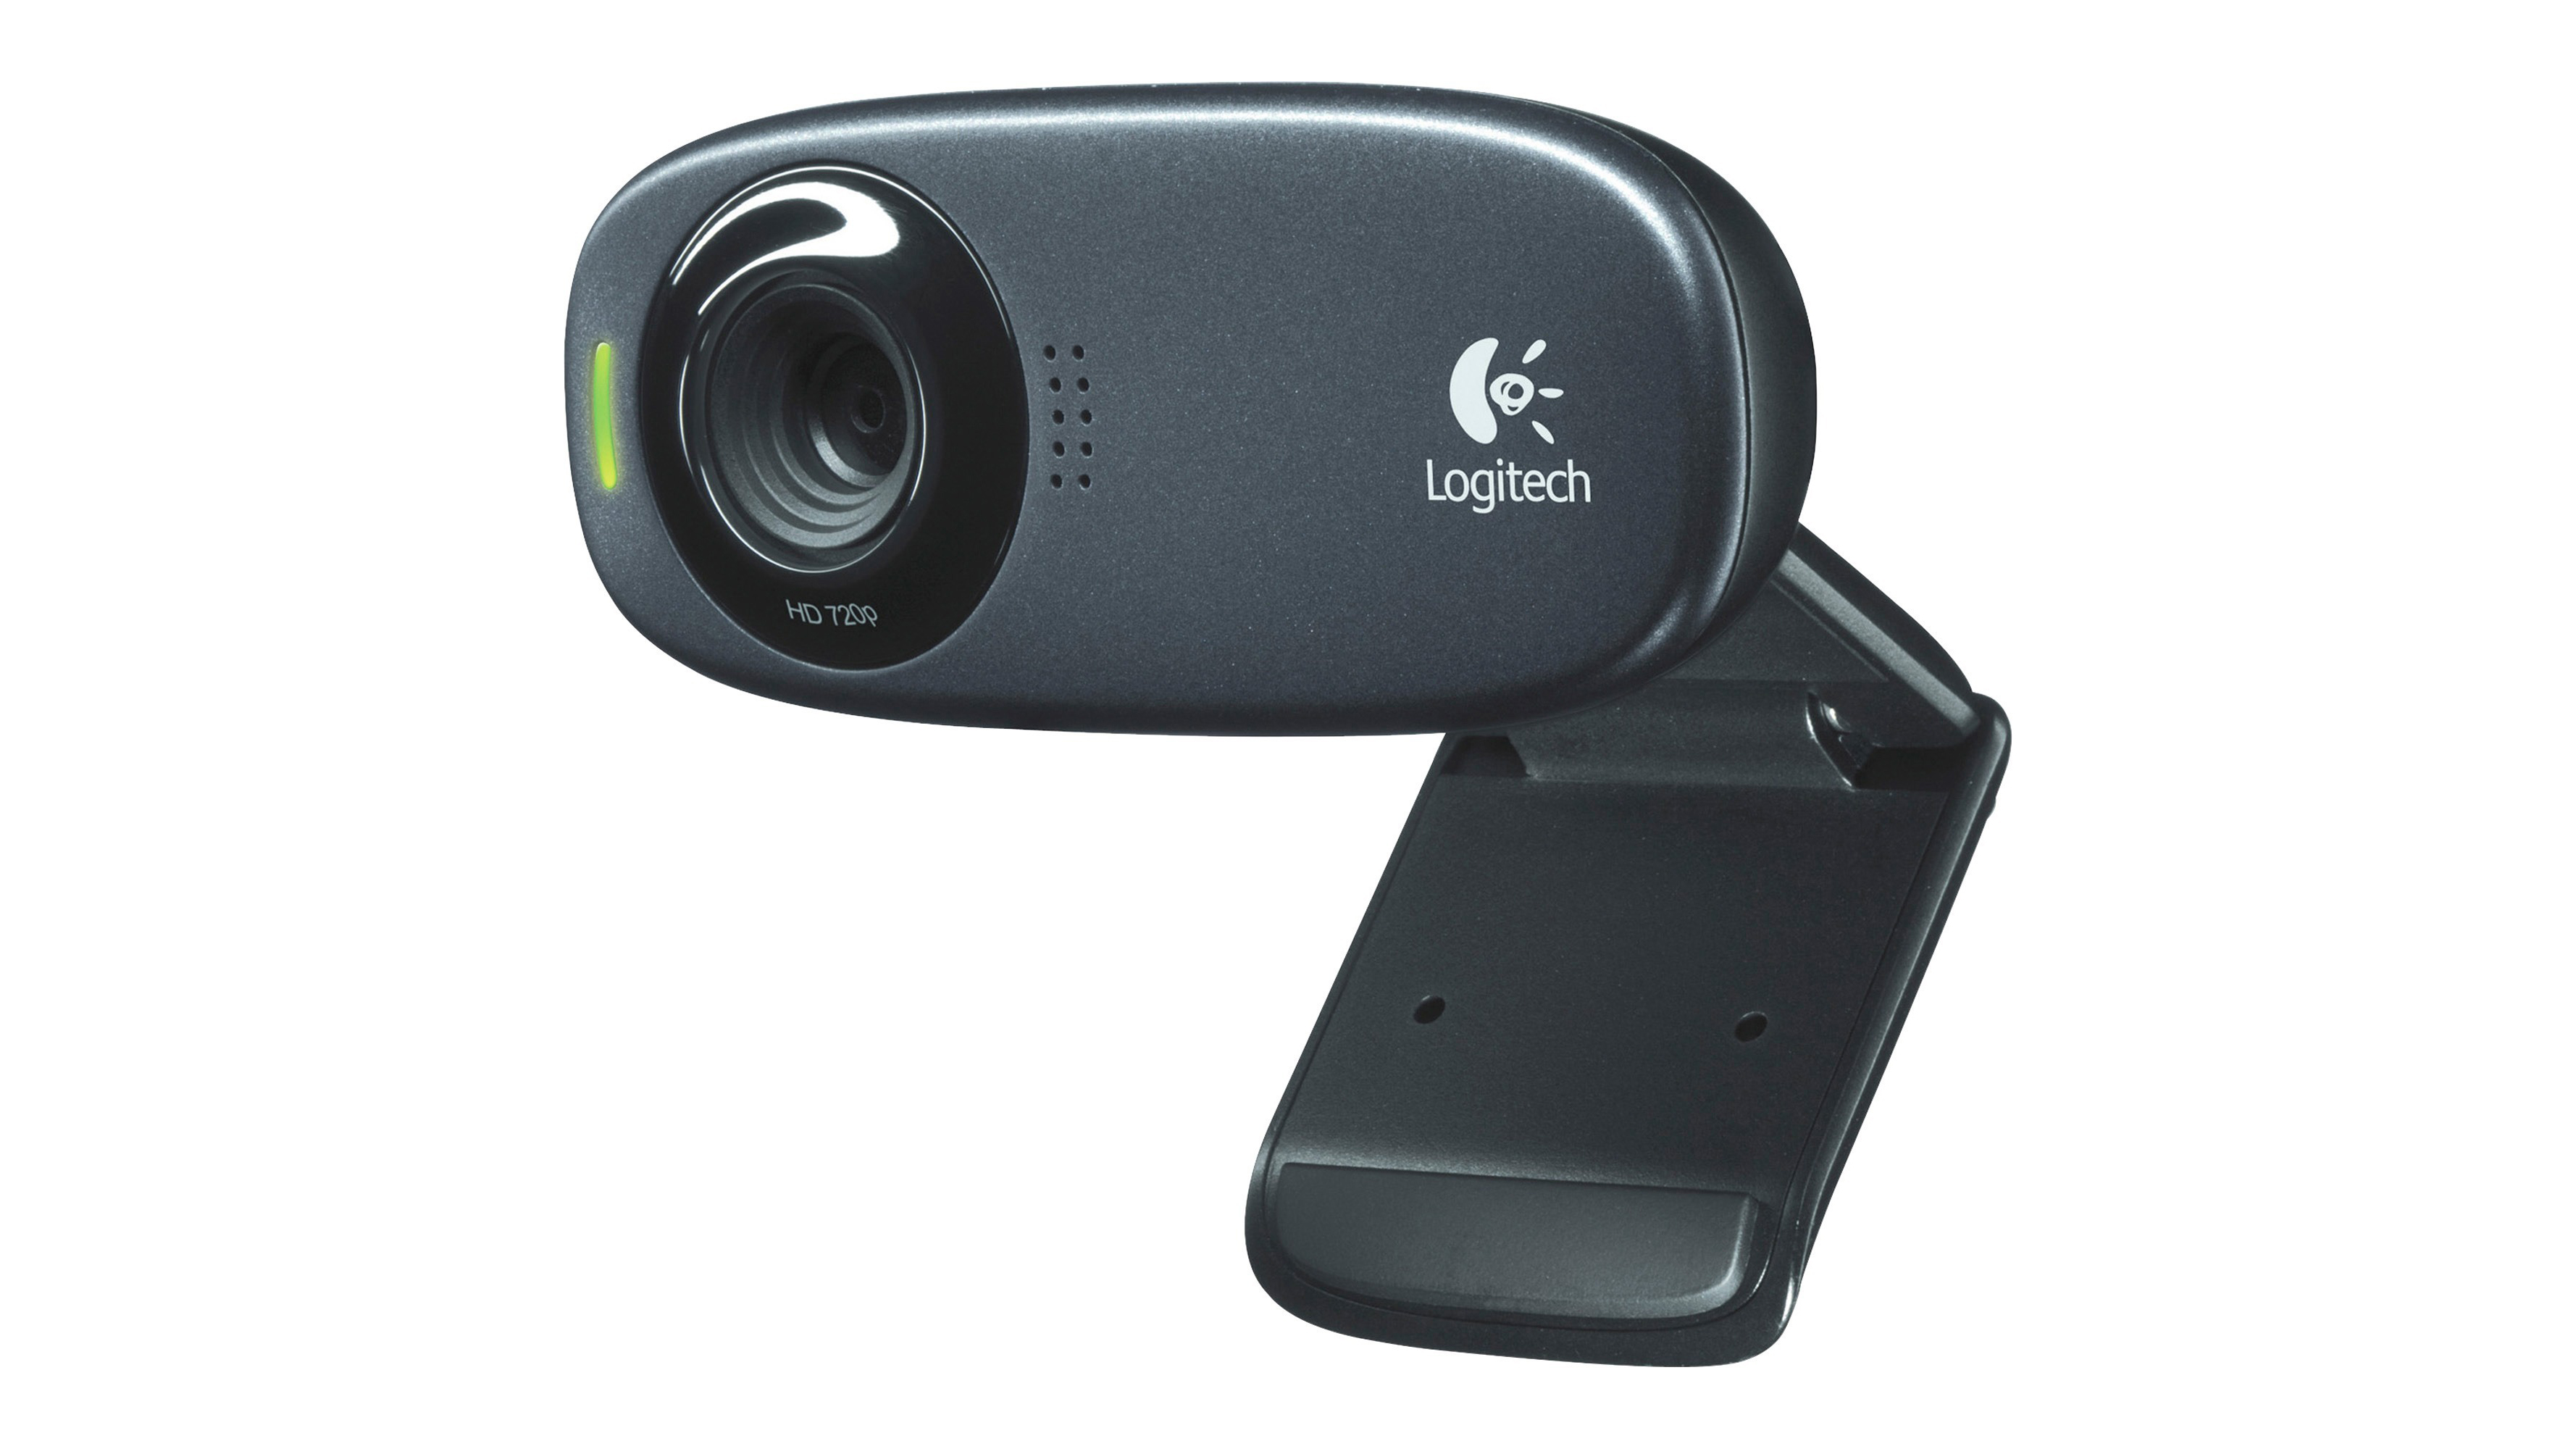 Logitech HD Webcam C310 is a great affordable option